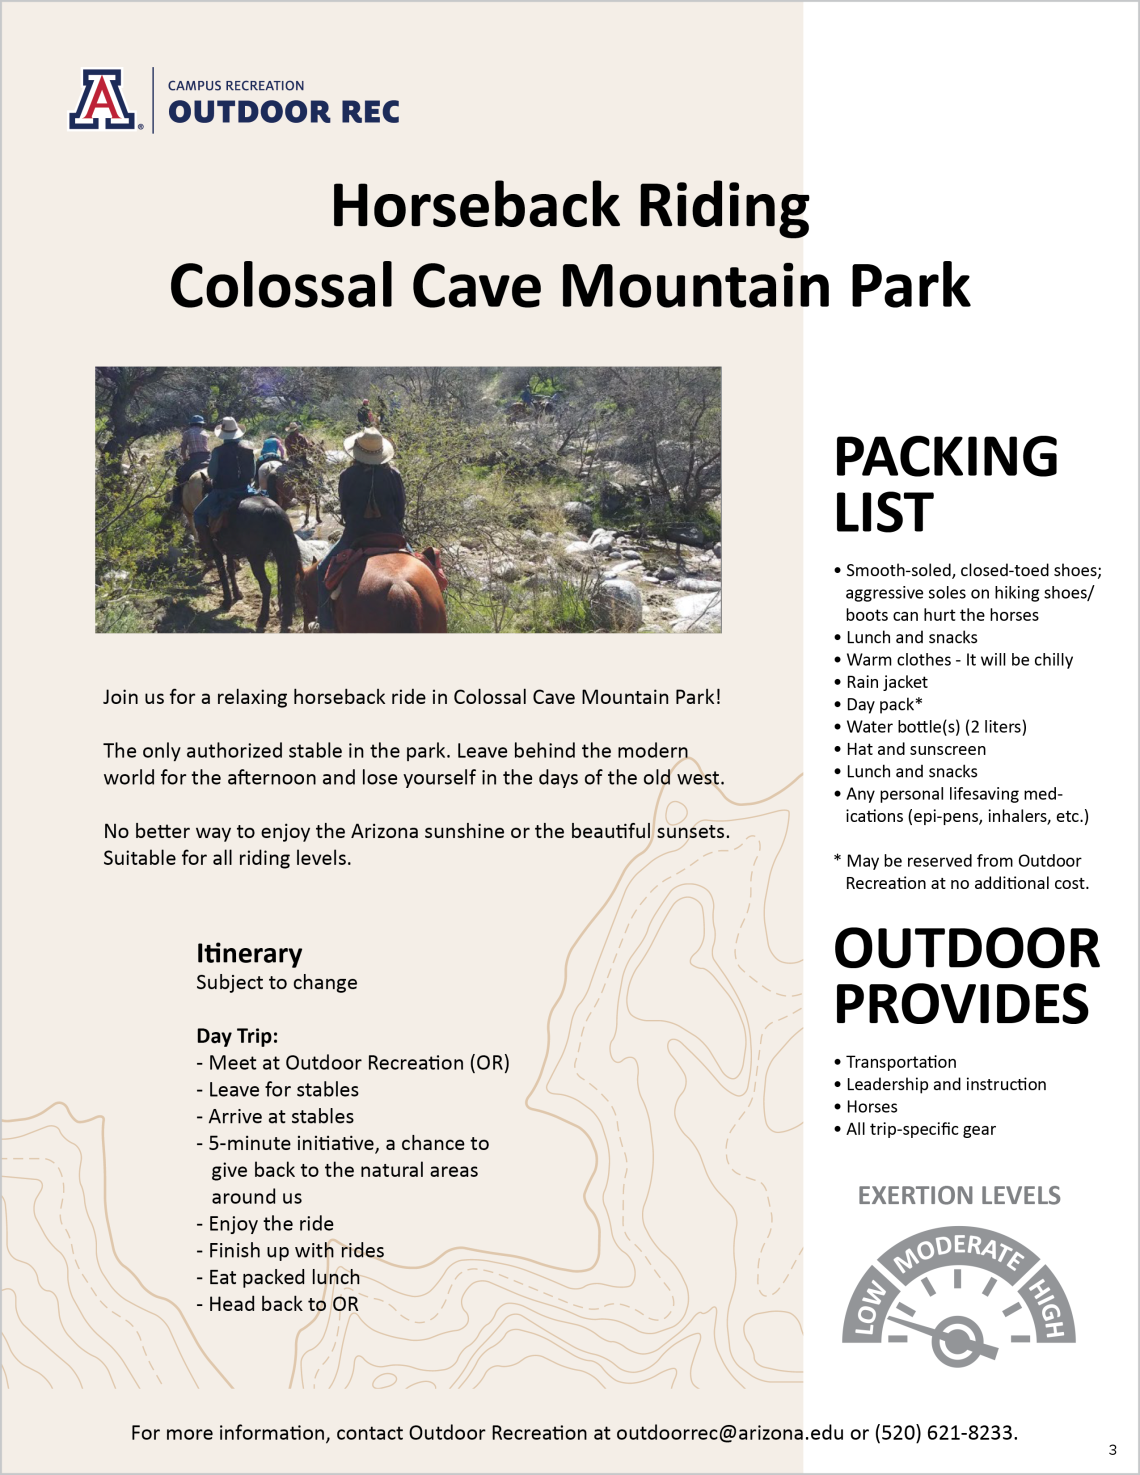 Horseback Riding - Colossal Cave Mountain Park